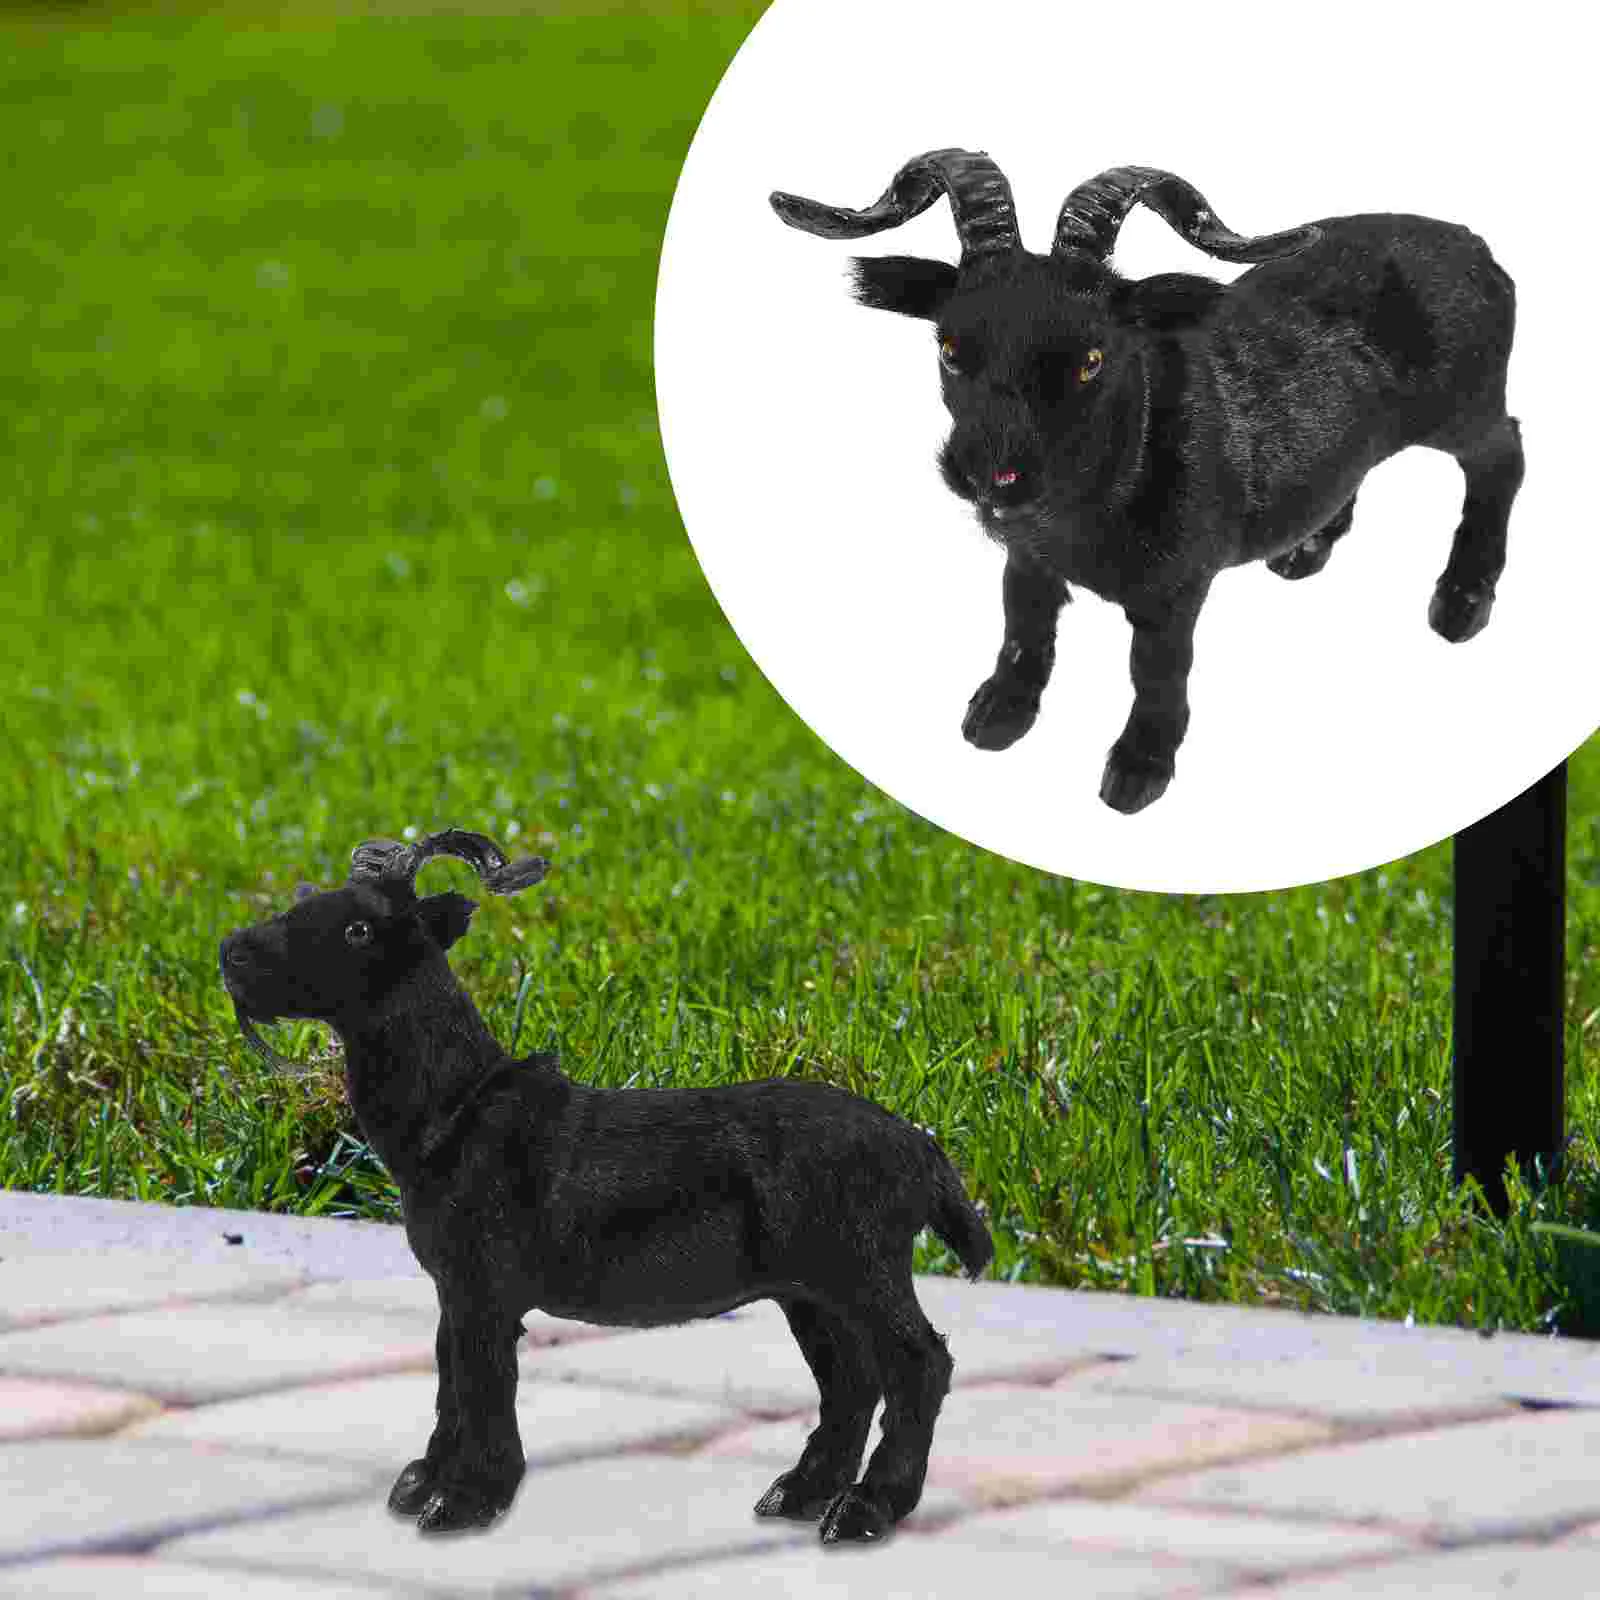 

Plush Goat Ornament Outdoor Decorations Black Goat-shape Statue Lawn Resin Rooster Garden Baphomet peluche